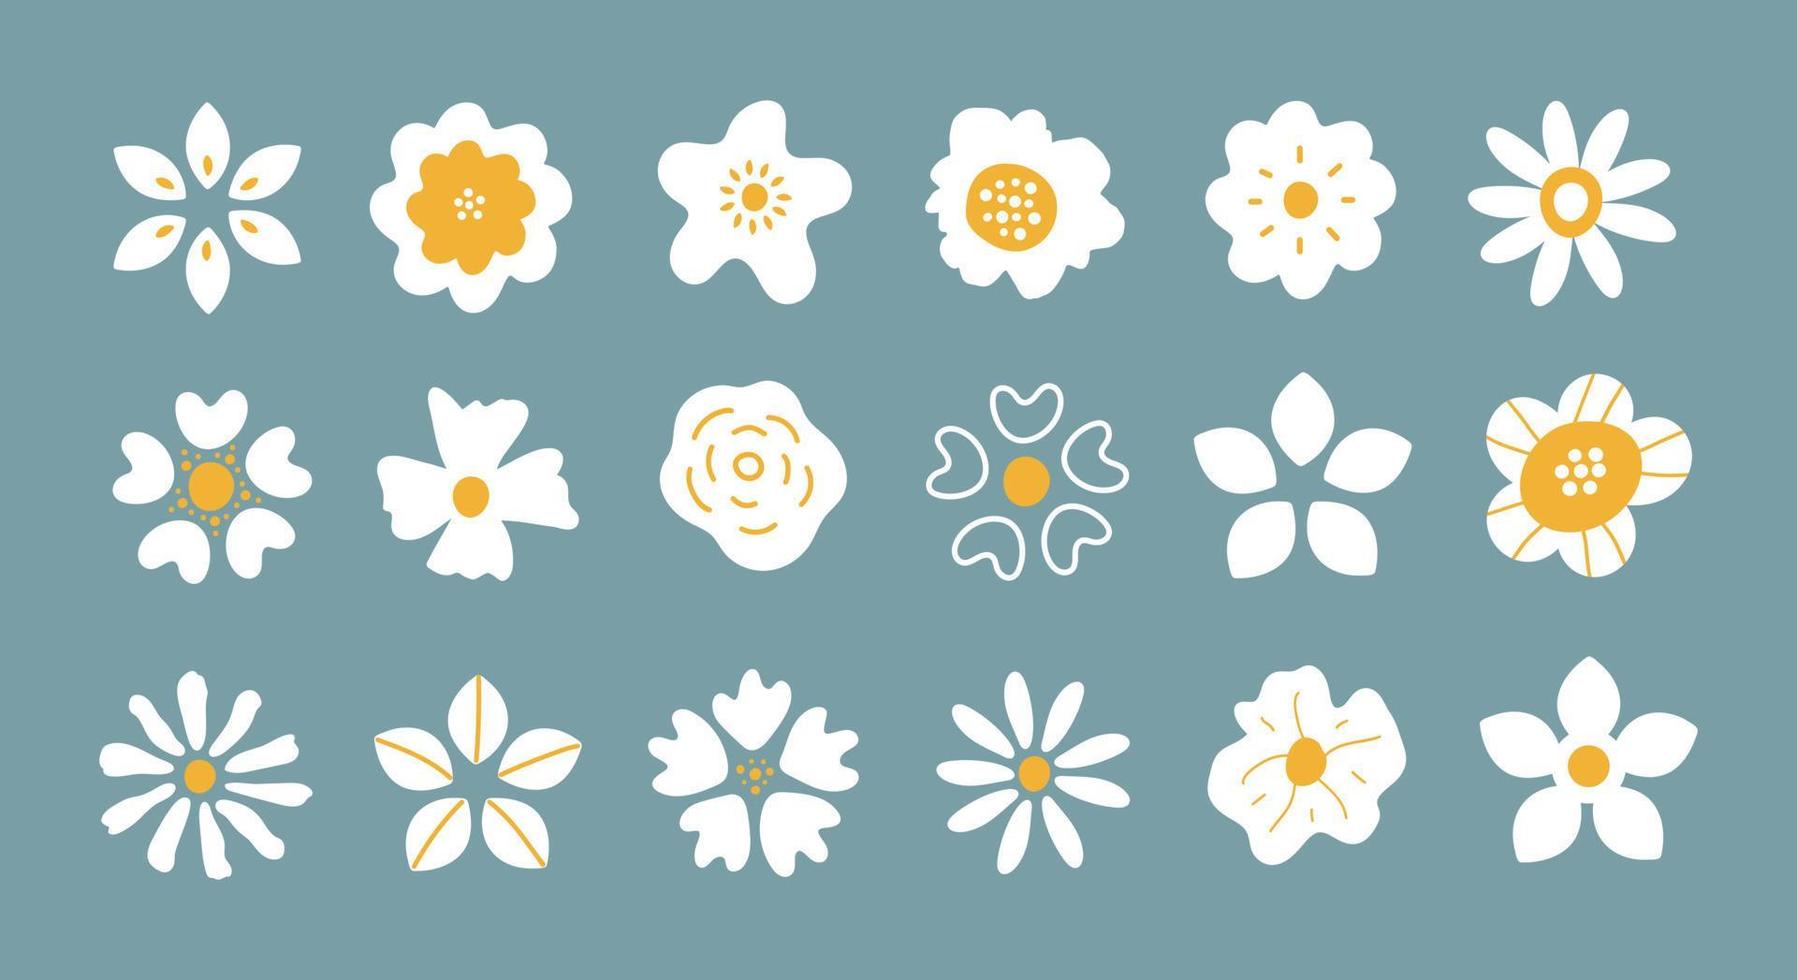 argumento Sensación Respectivamente conjunto vectorial de pétalos de flores blancas simples dibujados a mano  aislados en fondo azul. colección